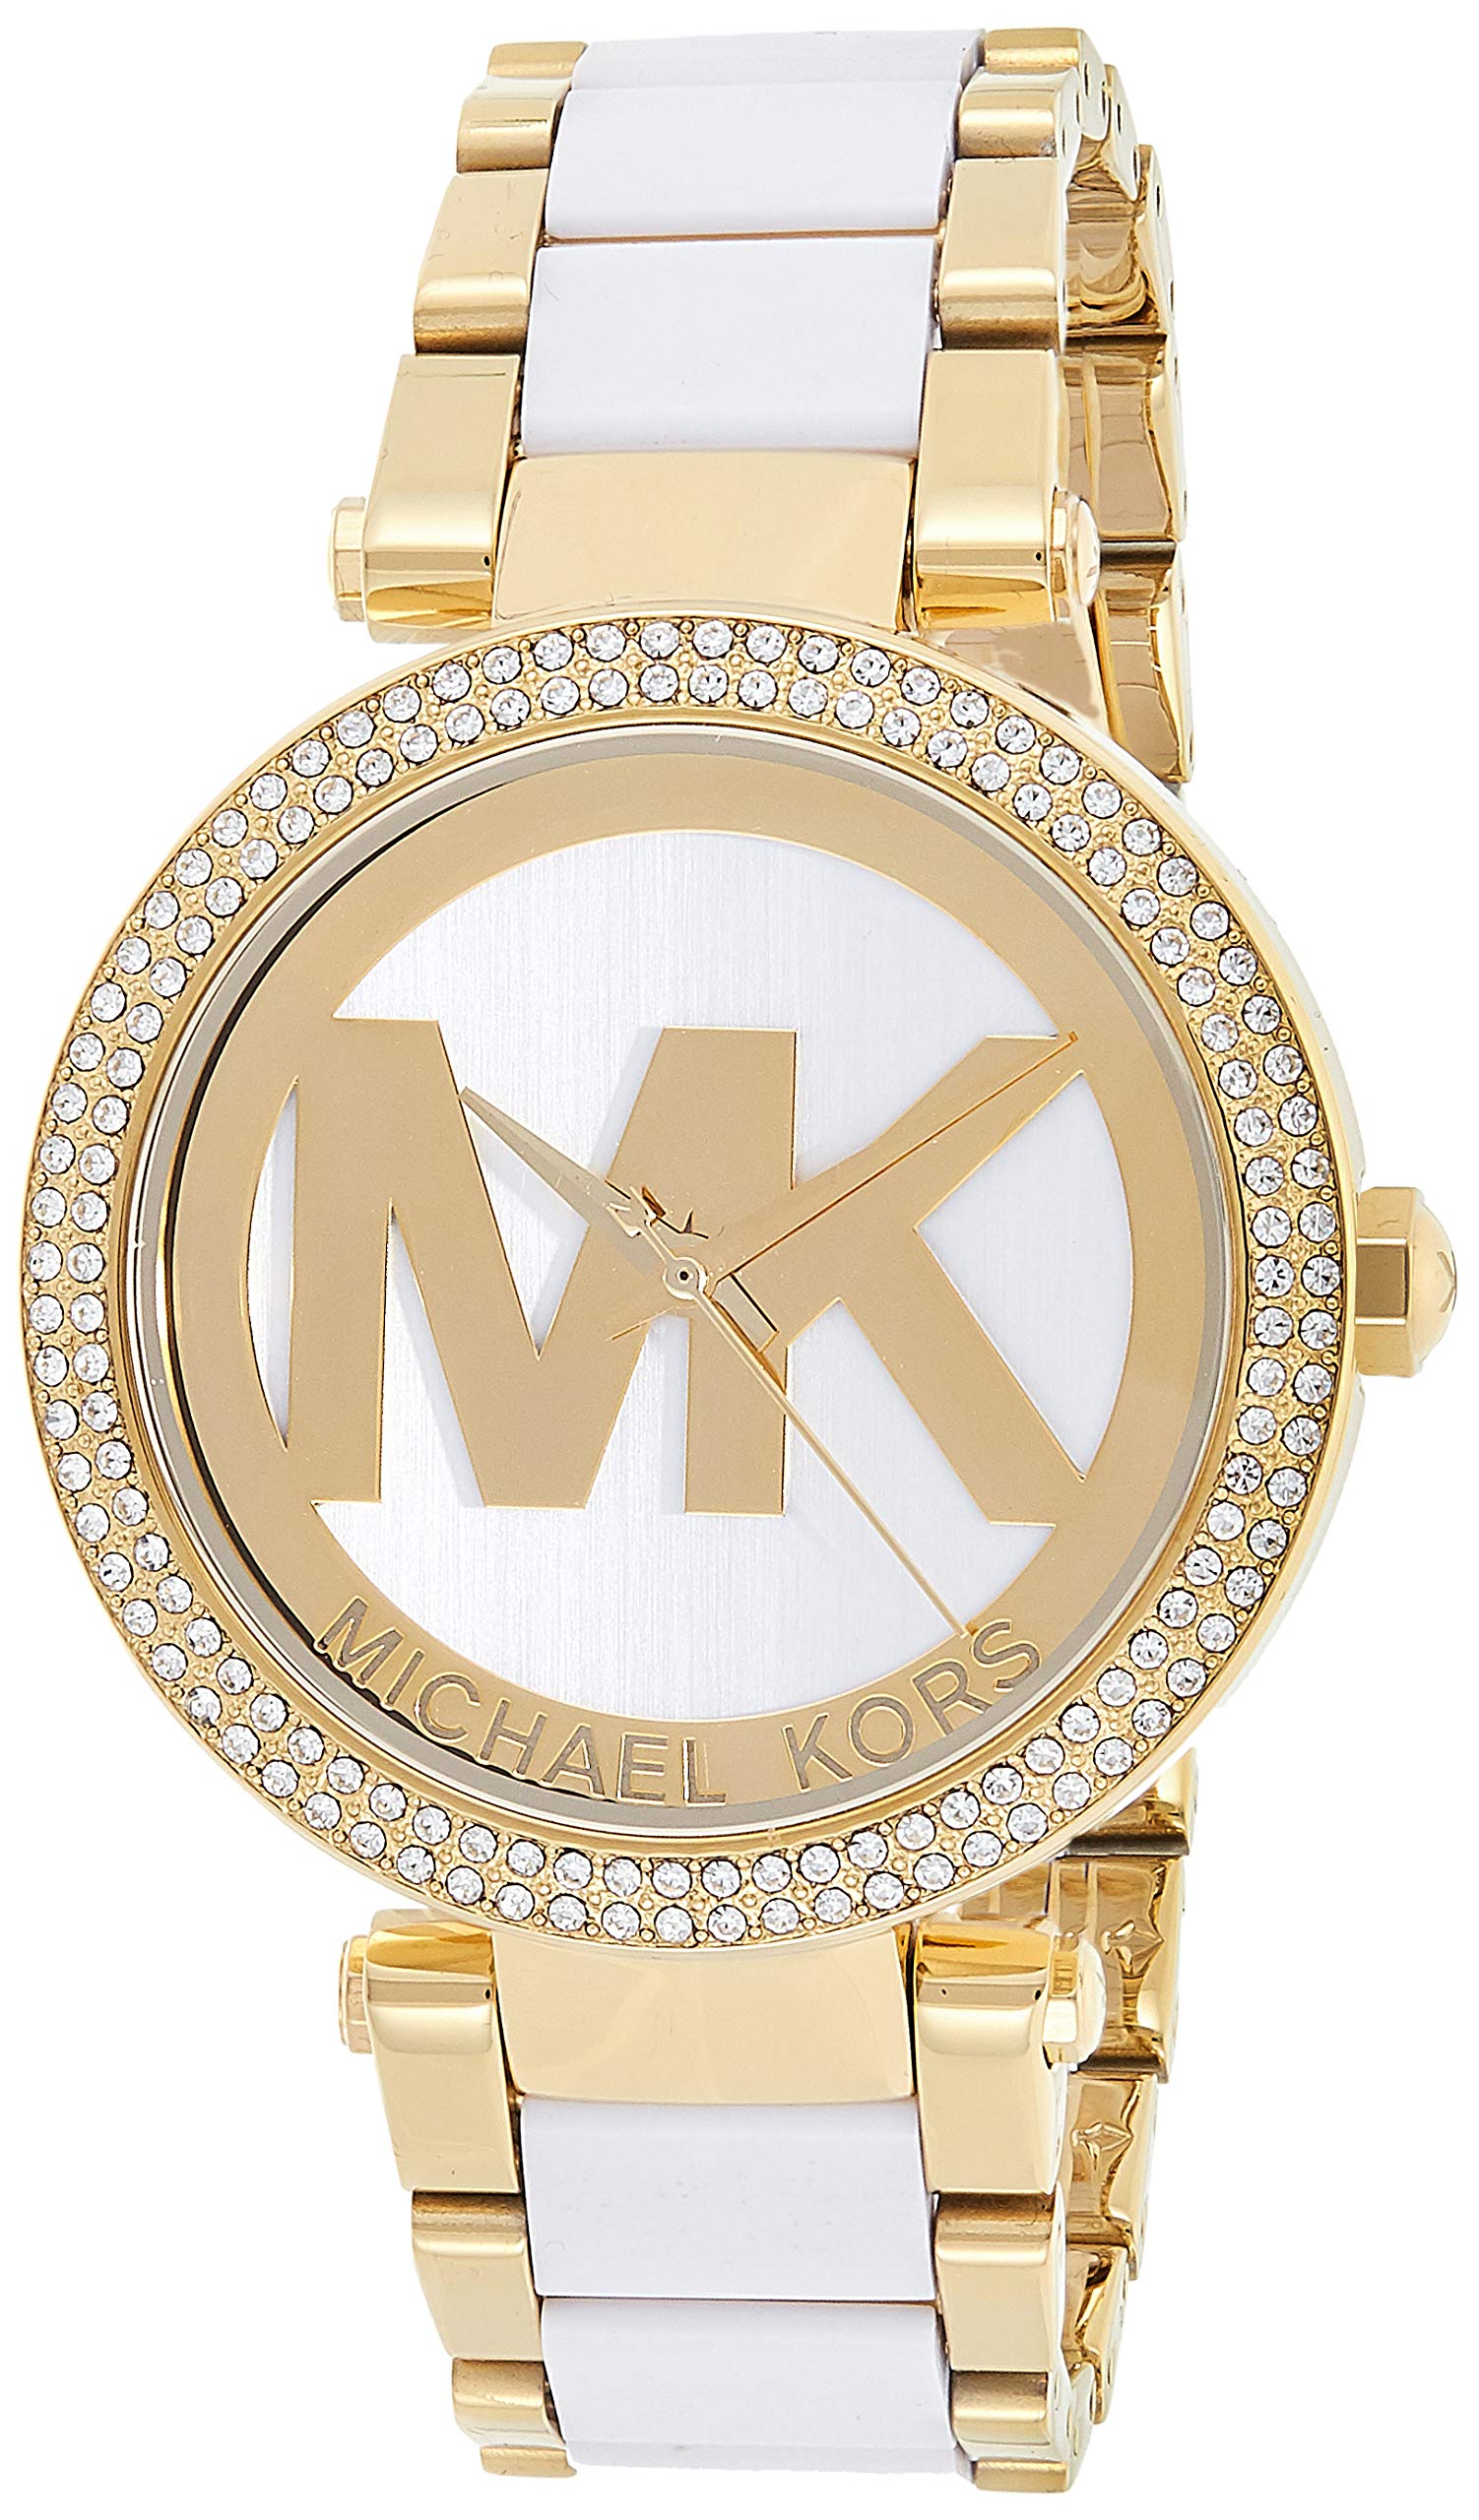 Michael Kors Women's Parker Gold-Tone Watch MK6313